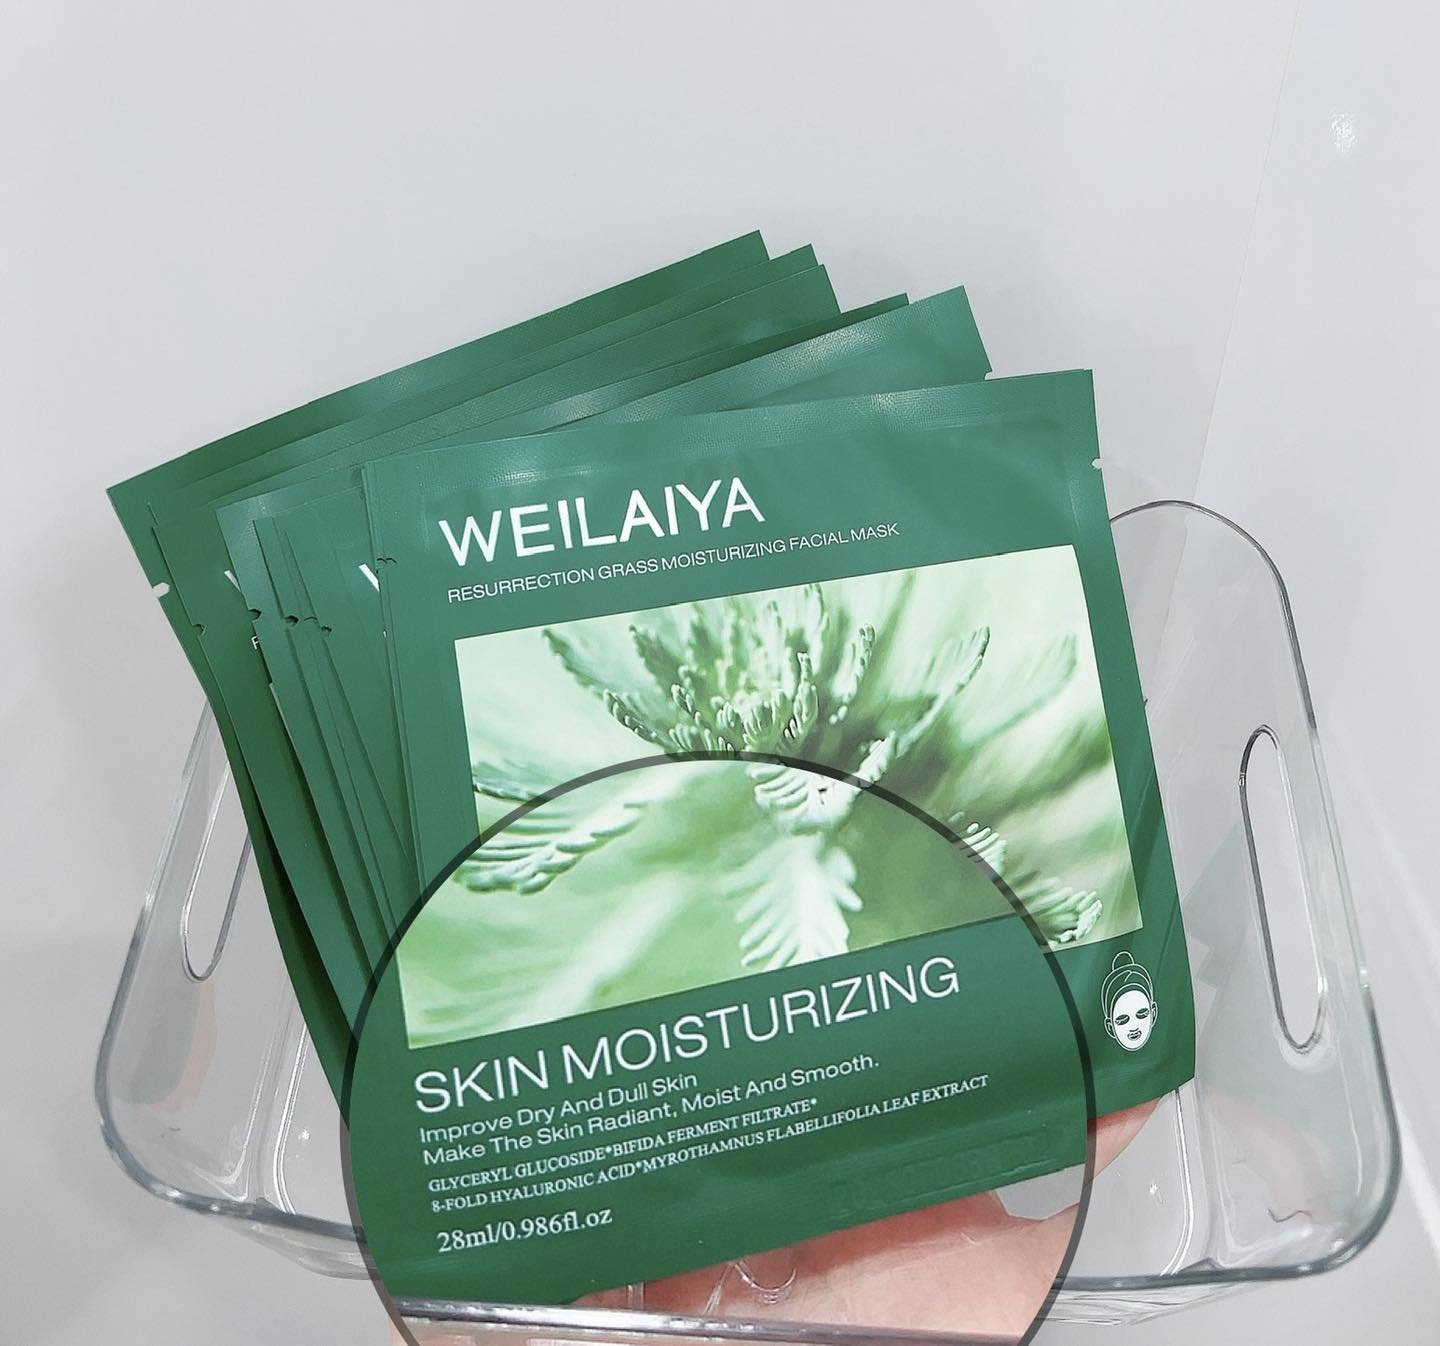 Combo 6 hộp Mặt nạ tái sinh cỏ vạn năm Weilaiya (Hộp 10 miếng) - Weilaiya Resurrection Grass Moisturizing Facial Mask